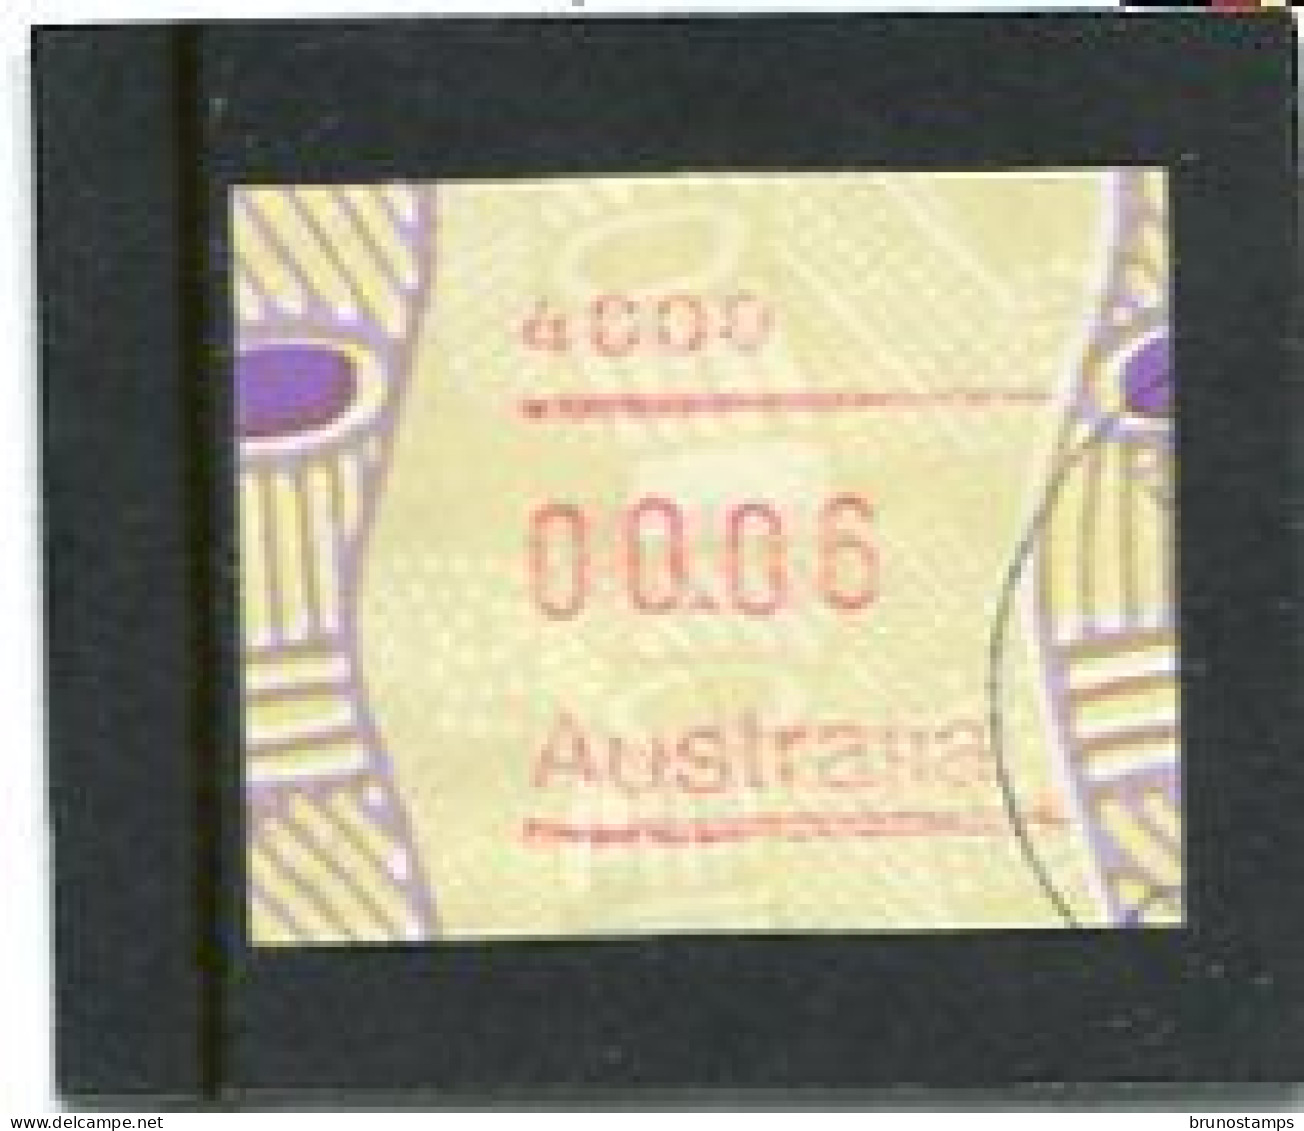 AUSTRALIA - 1999  6c  FRAMA  TIWI  POSTCODE 4000 (BRISBANE)   FINE USED - Vignette [ATM]